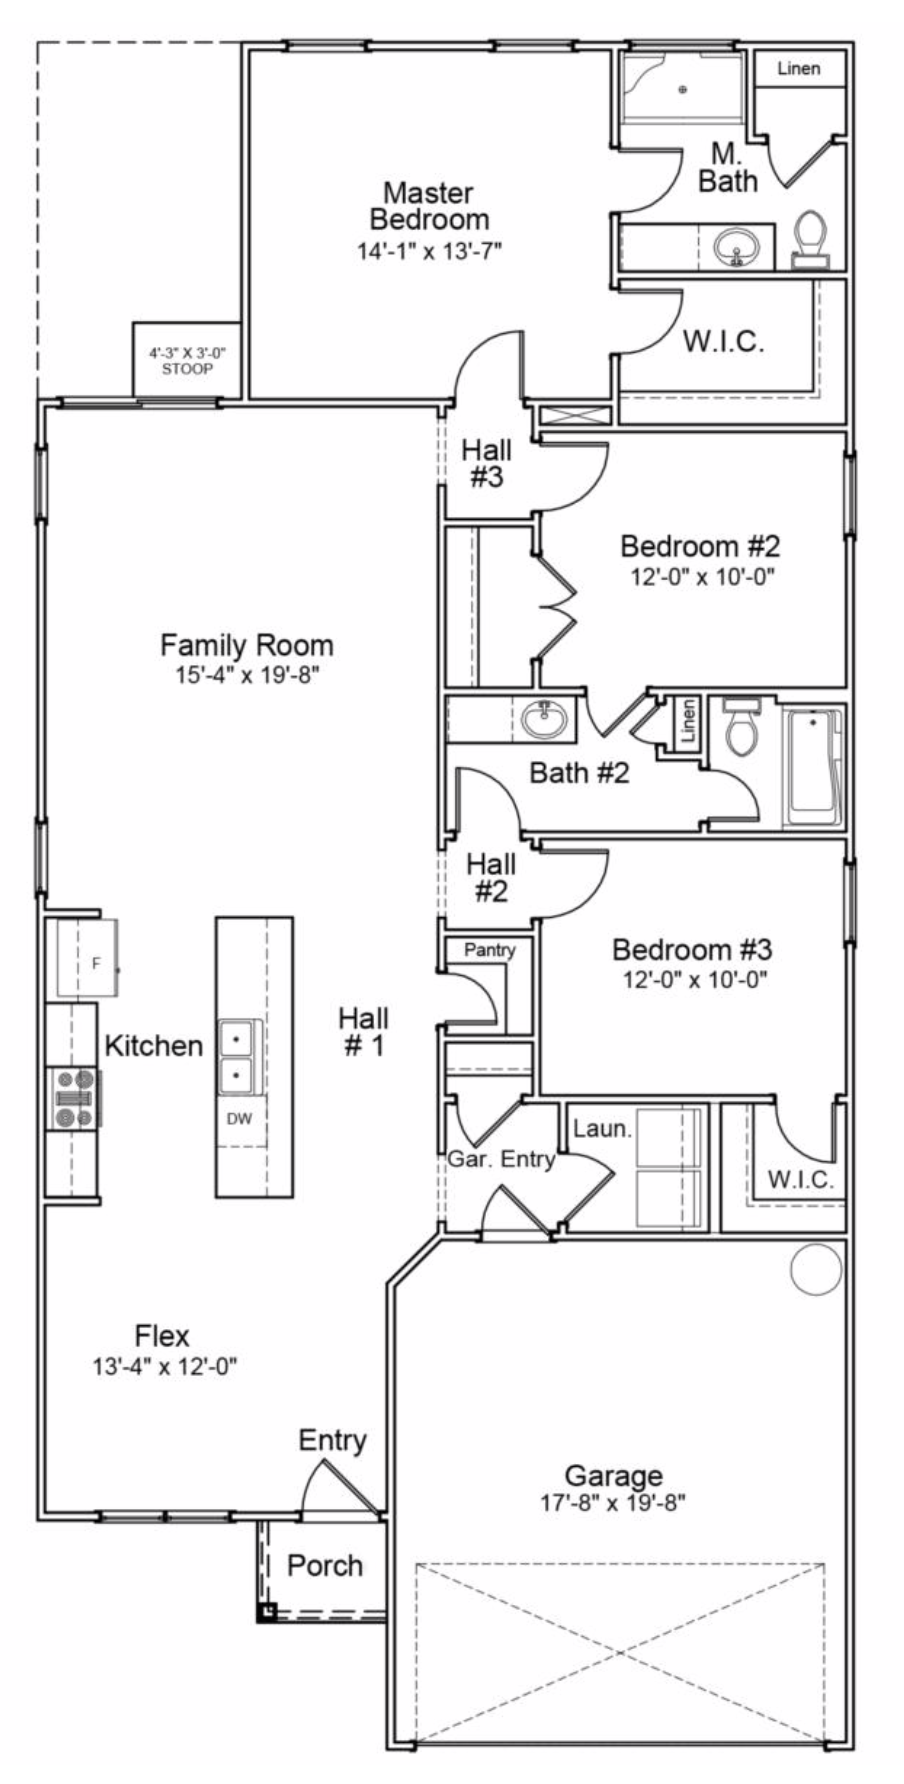 Brunswick floor plan image